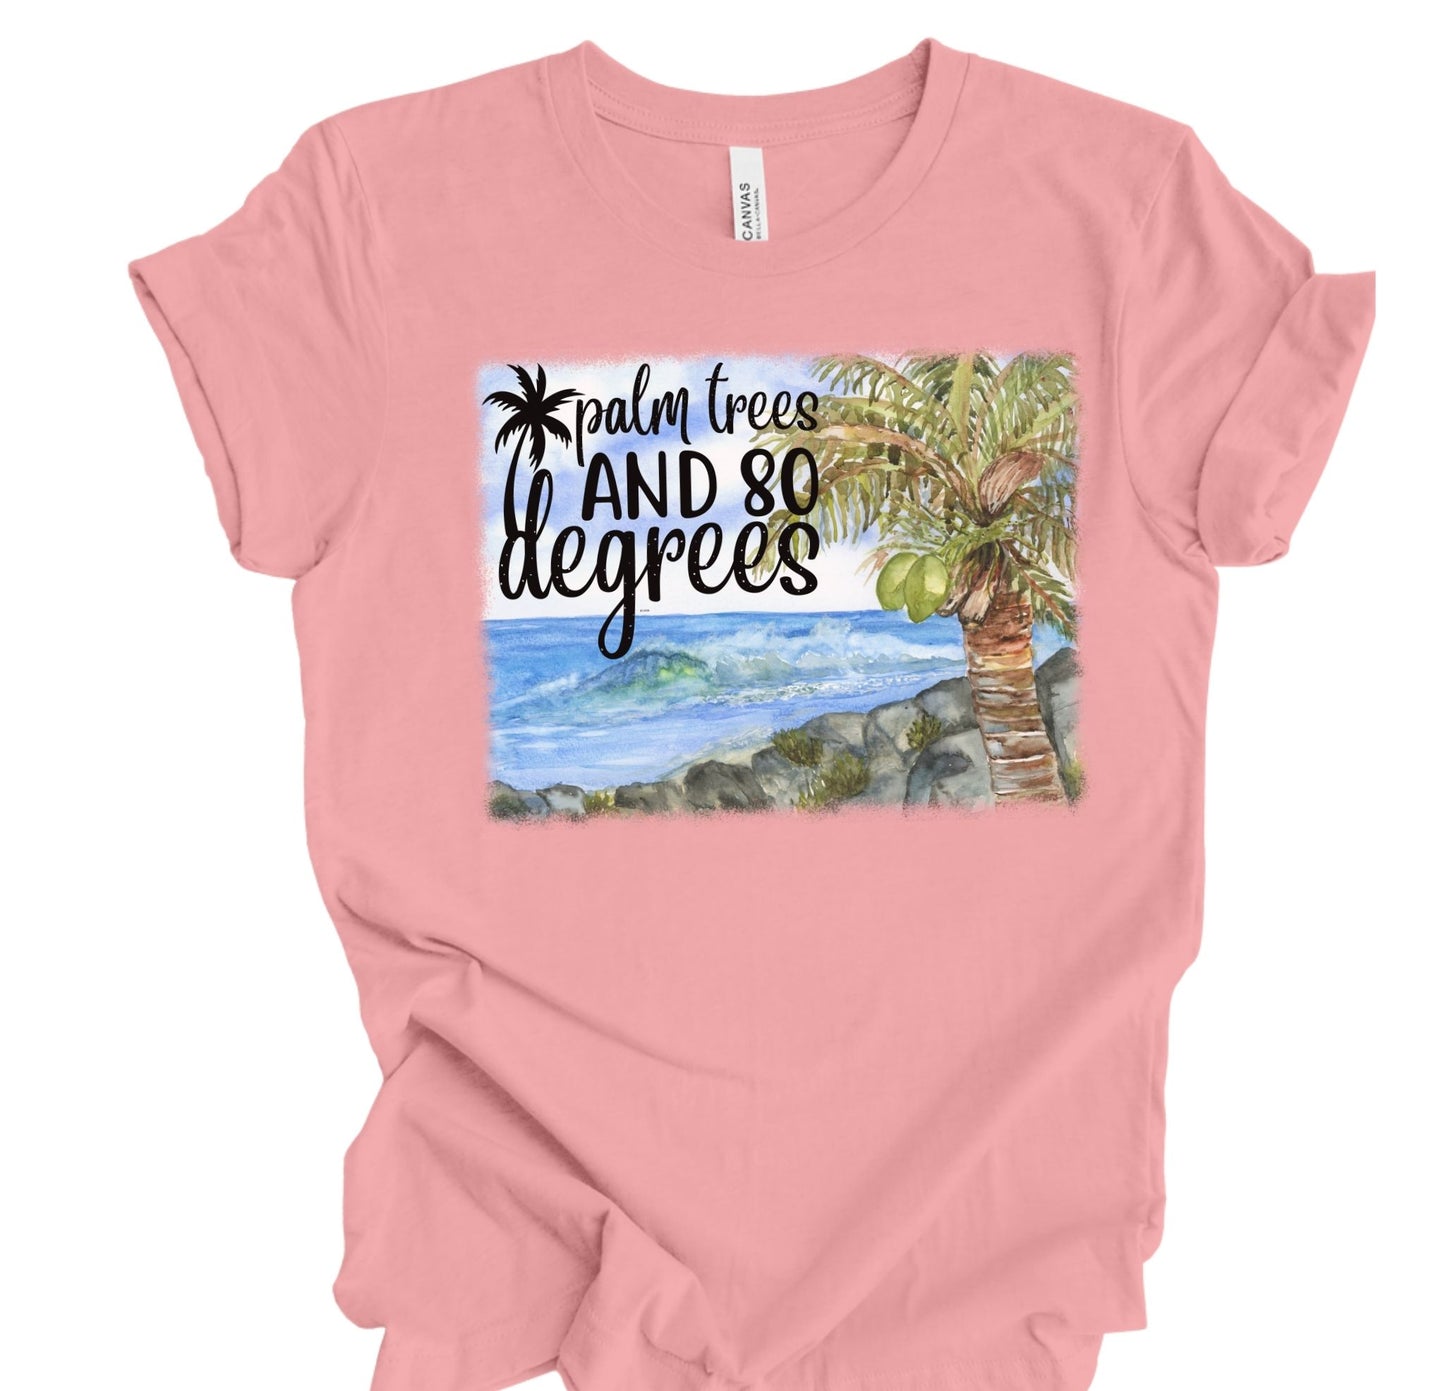 Palm Trees and 80 Degrees Tropical Beach Shirt